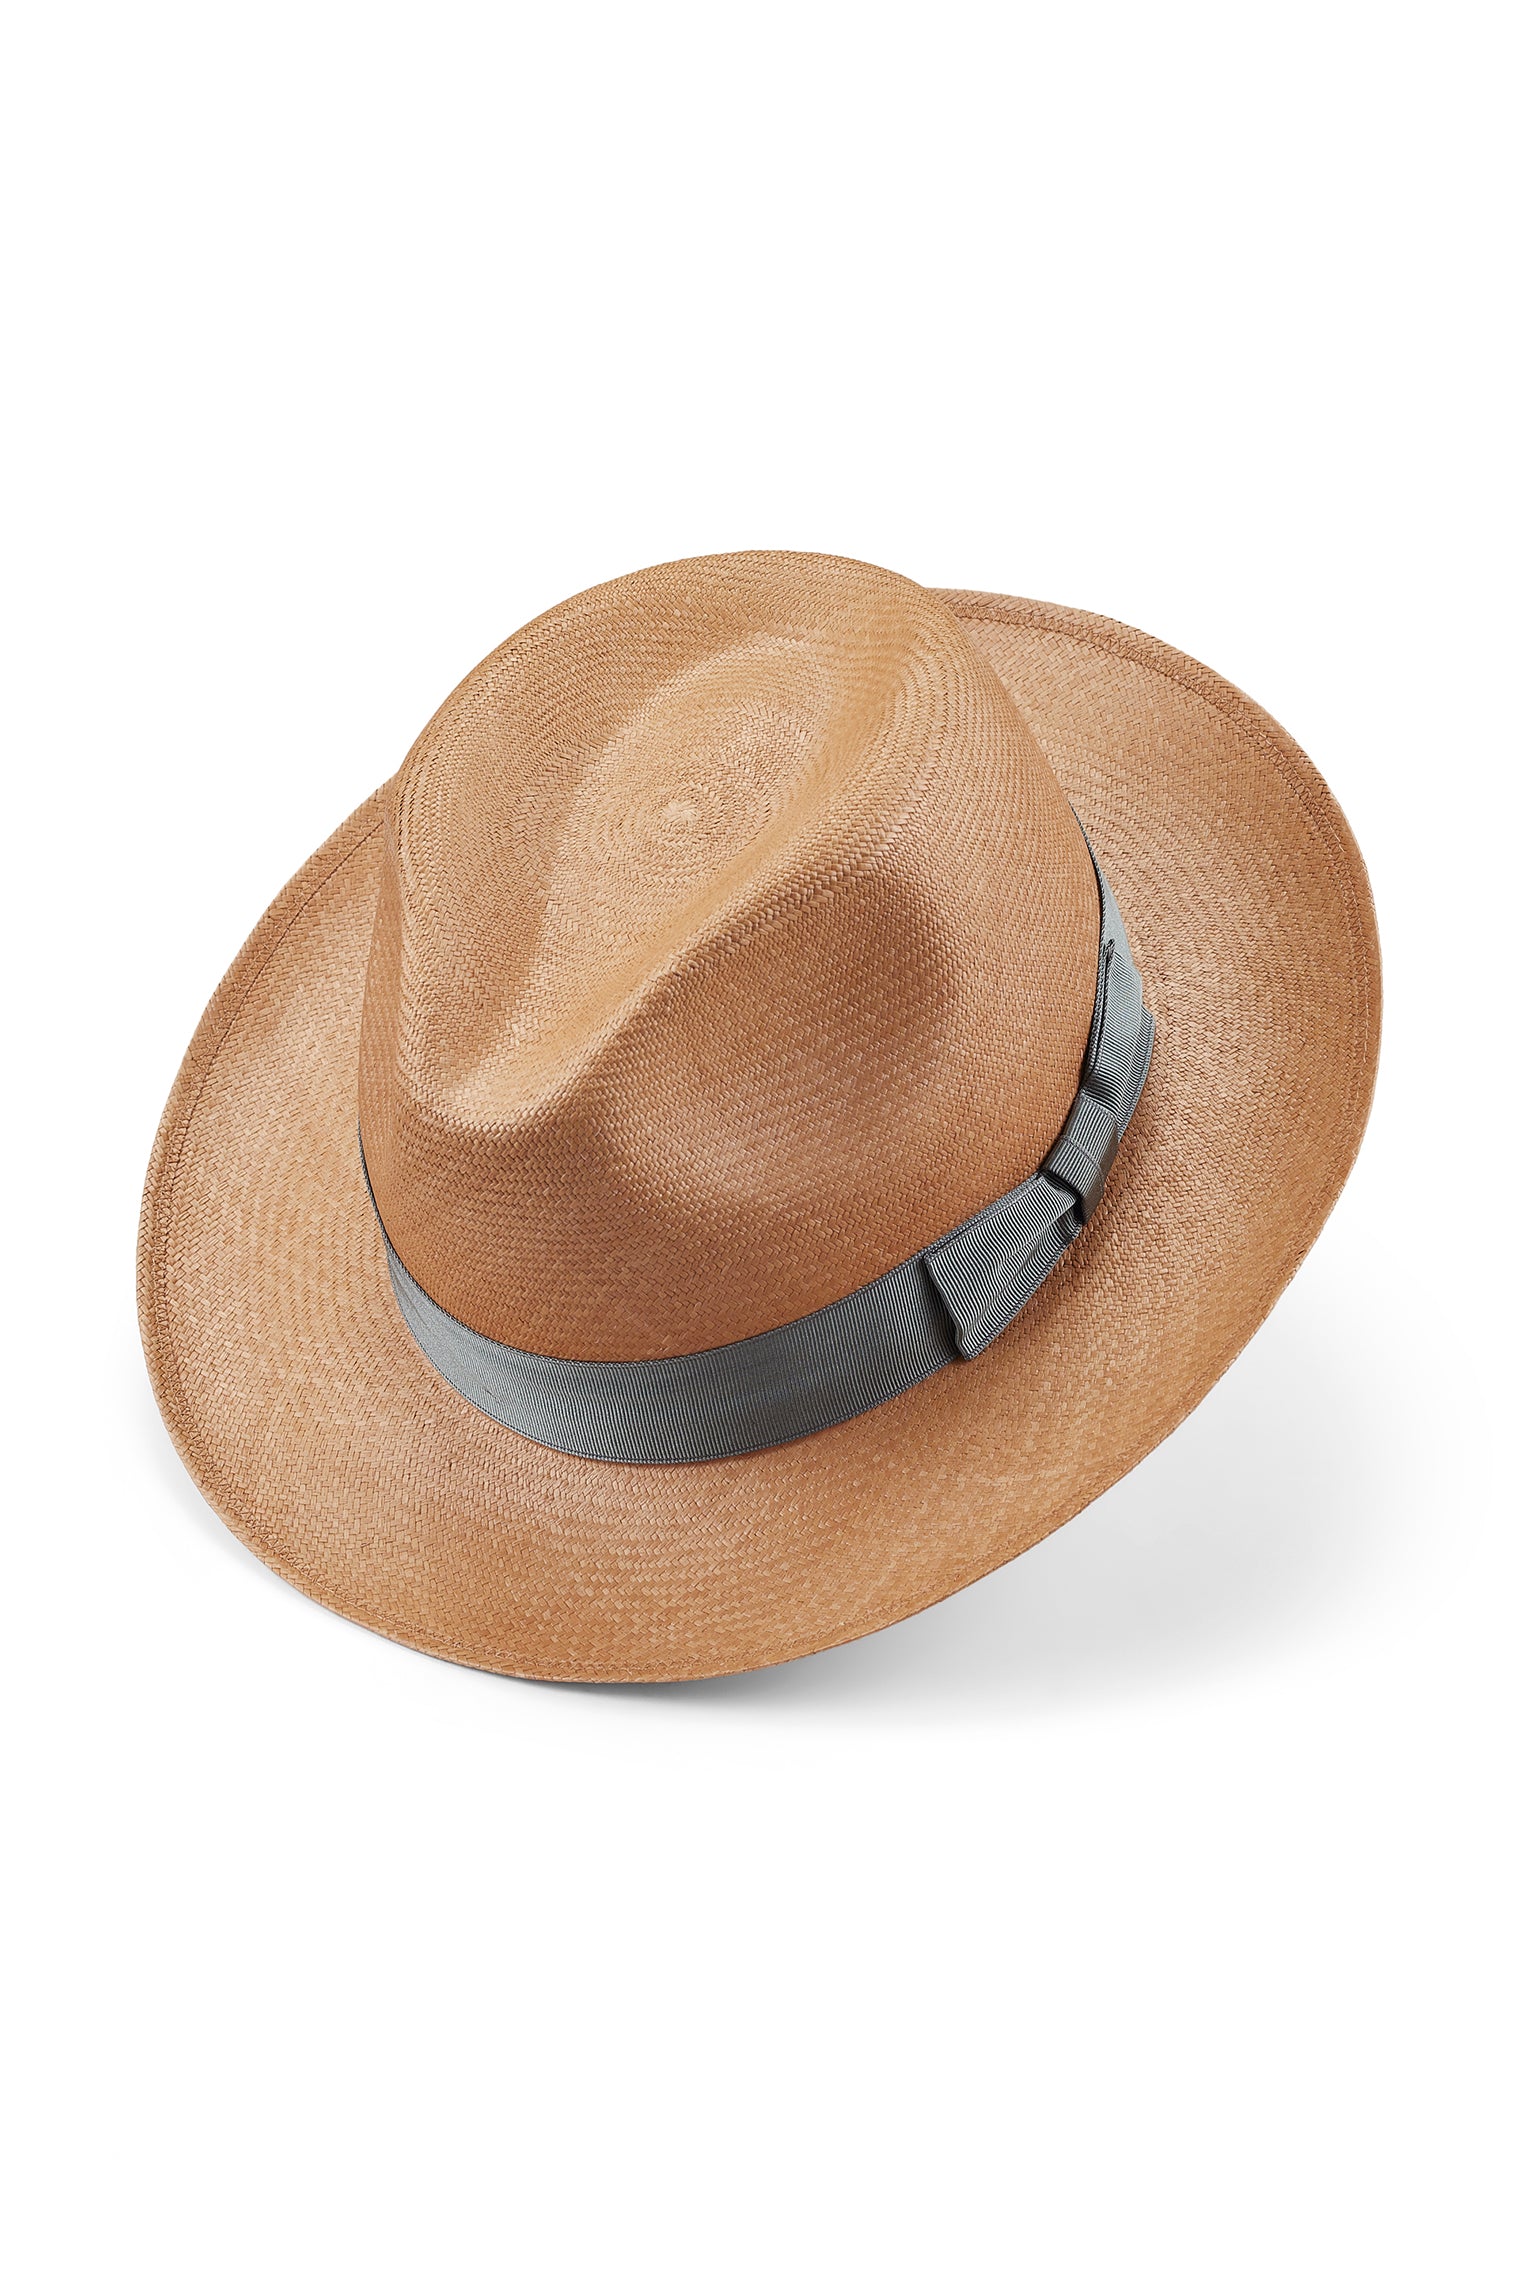 Fairbanks Mocha Panama - Panamas and Sun Hats for Men - Lock & Co. Hatters London UK